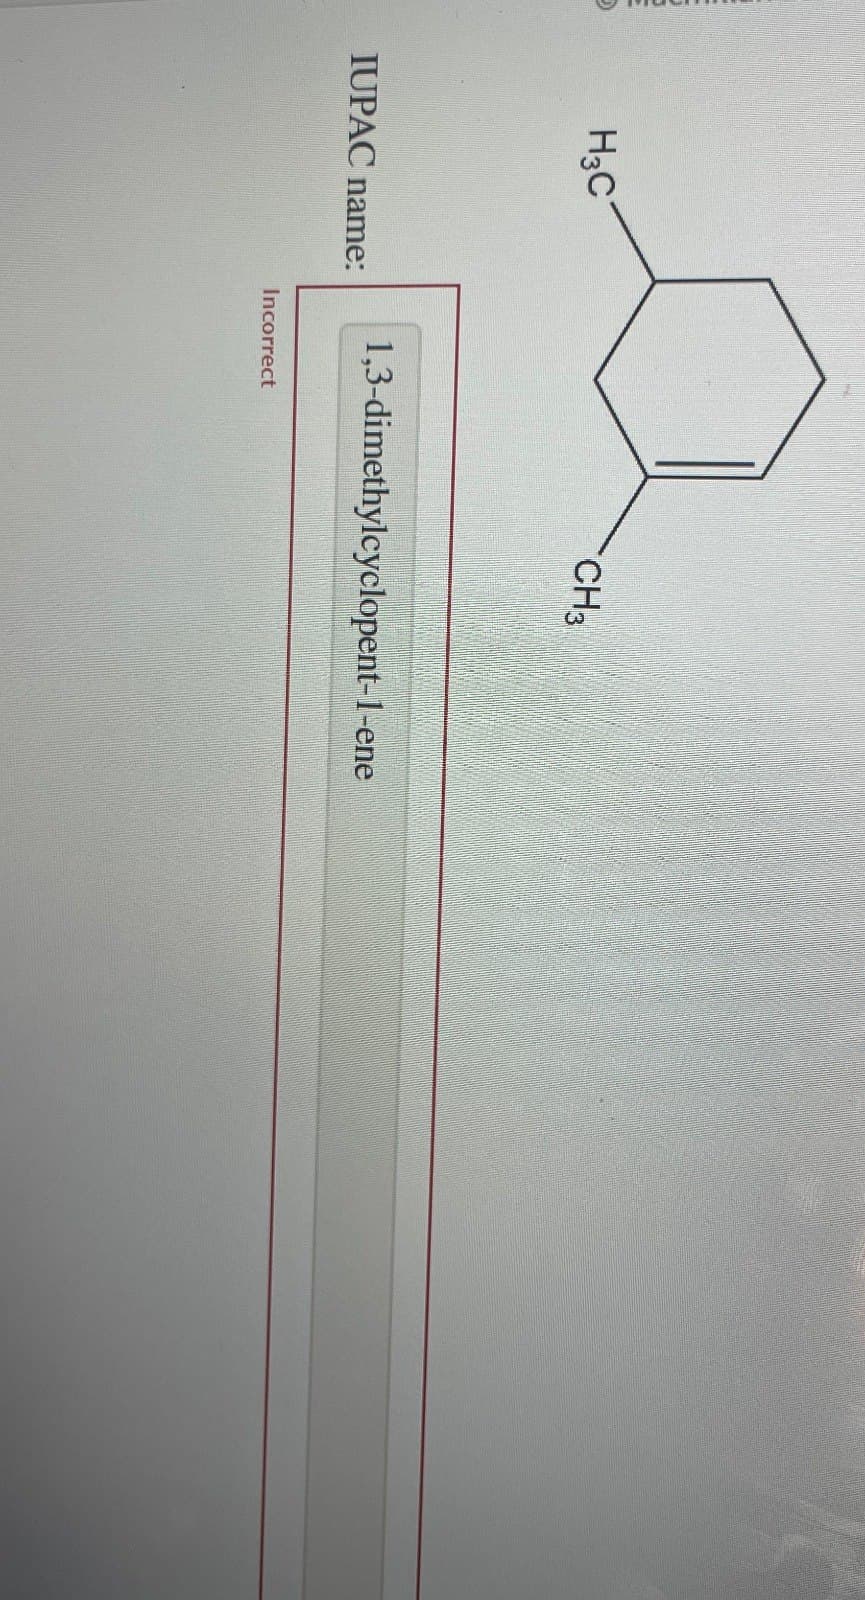 H3C
CH3
IUPAC name:
1,3-dimethylcyclopent-1-ene
Incorrect